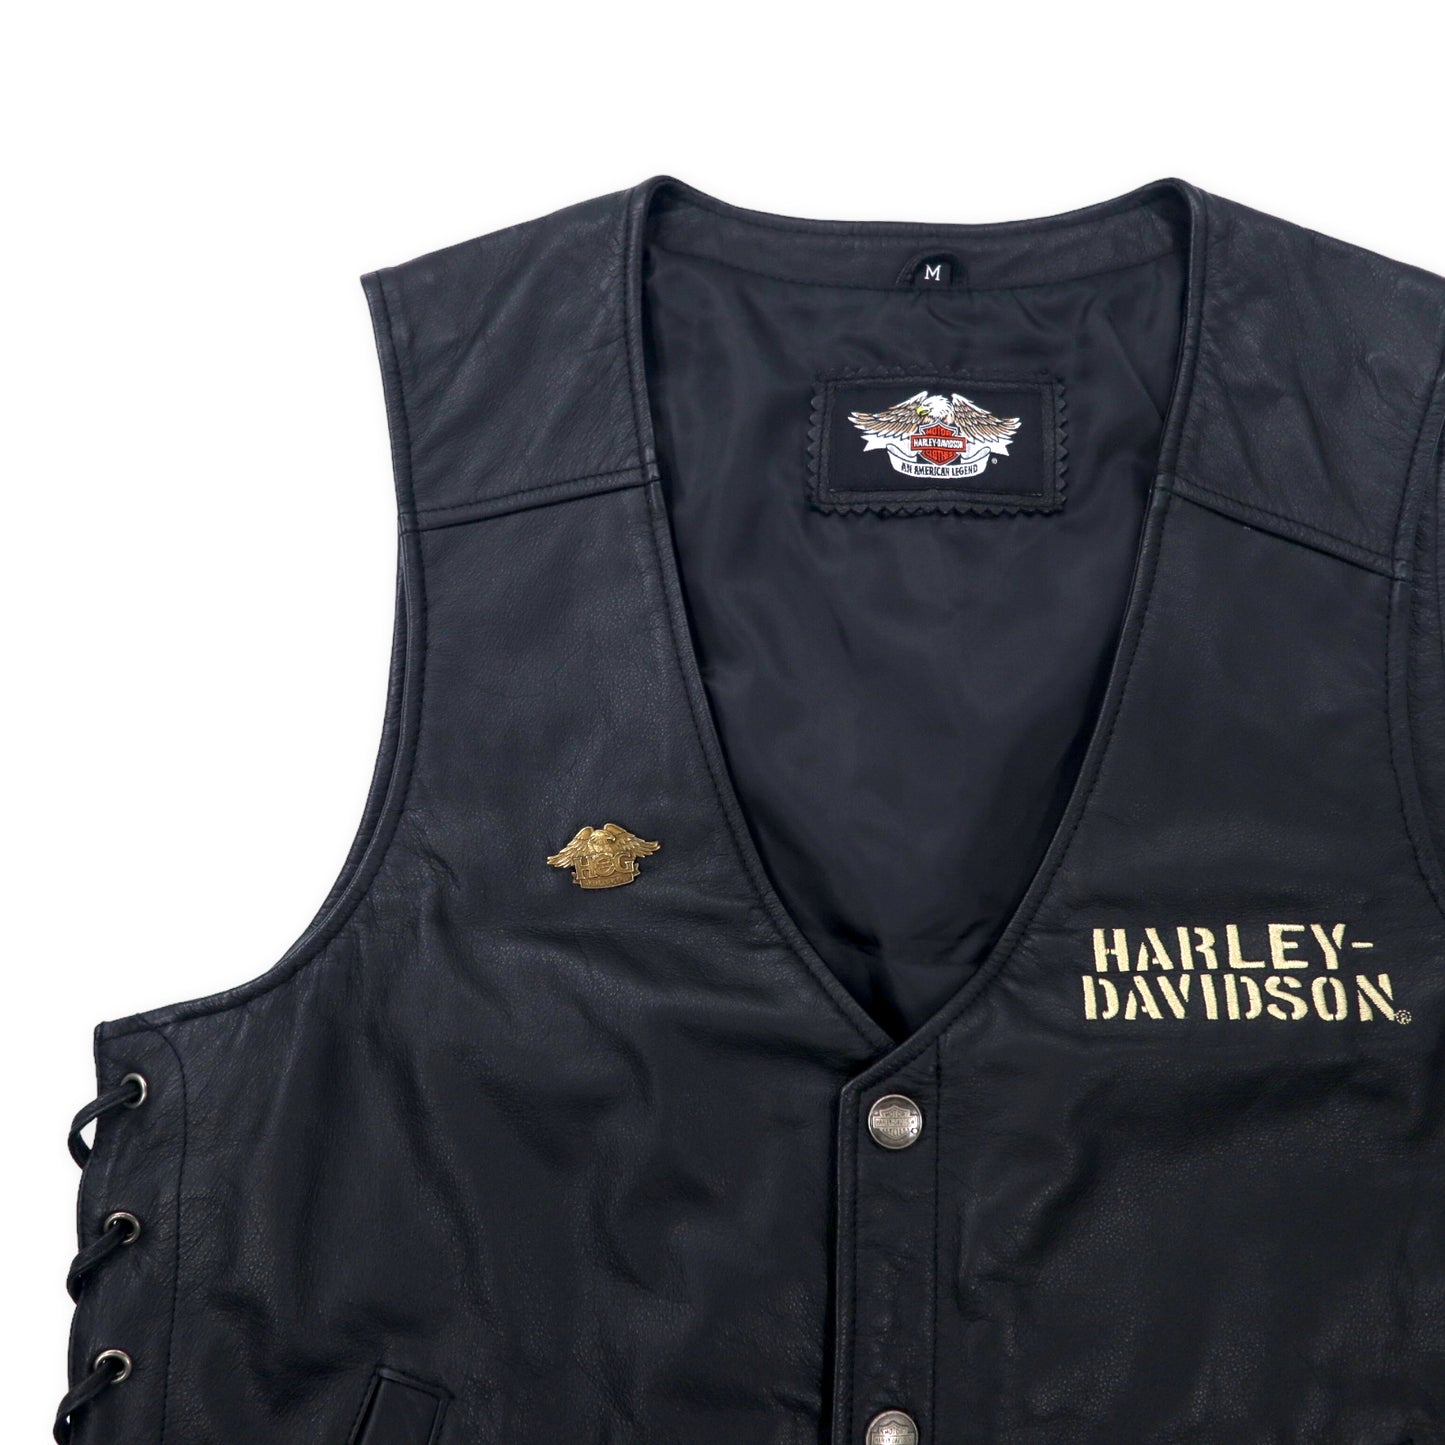 Harley Davidson lace -up leather vest M Black cowhide snap button 